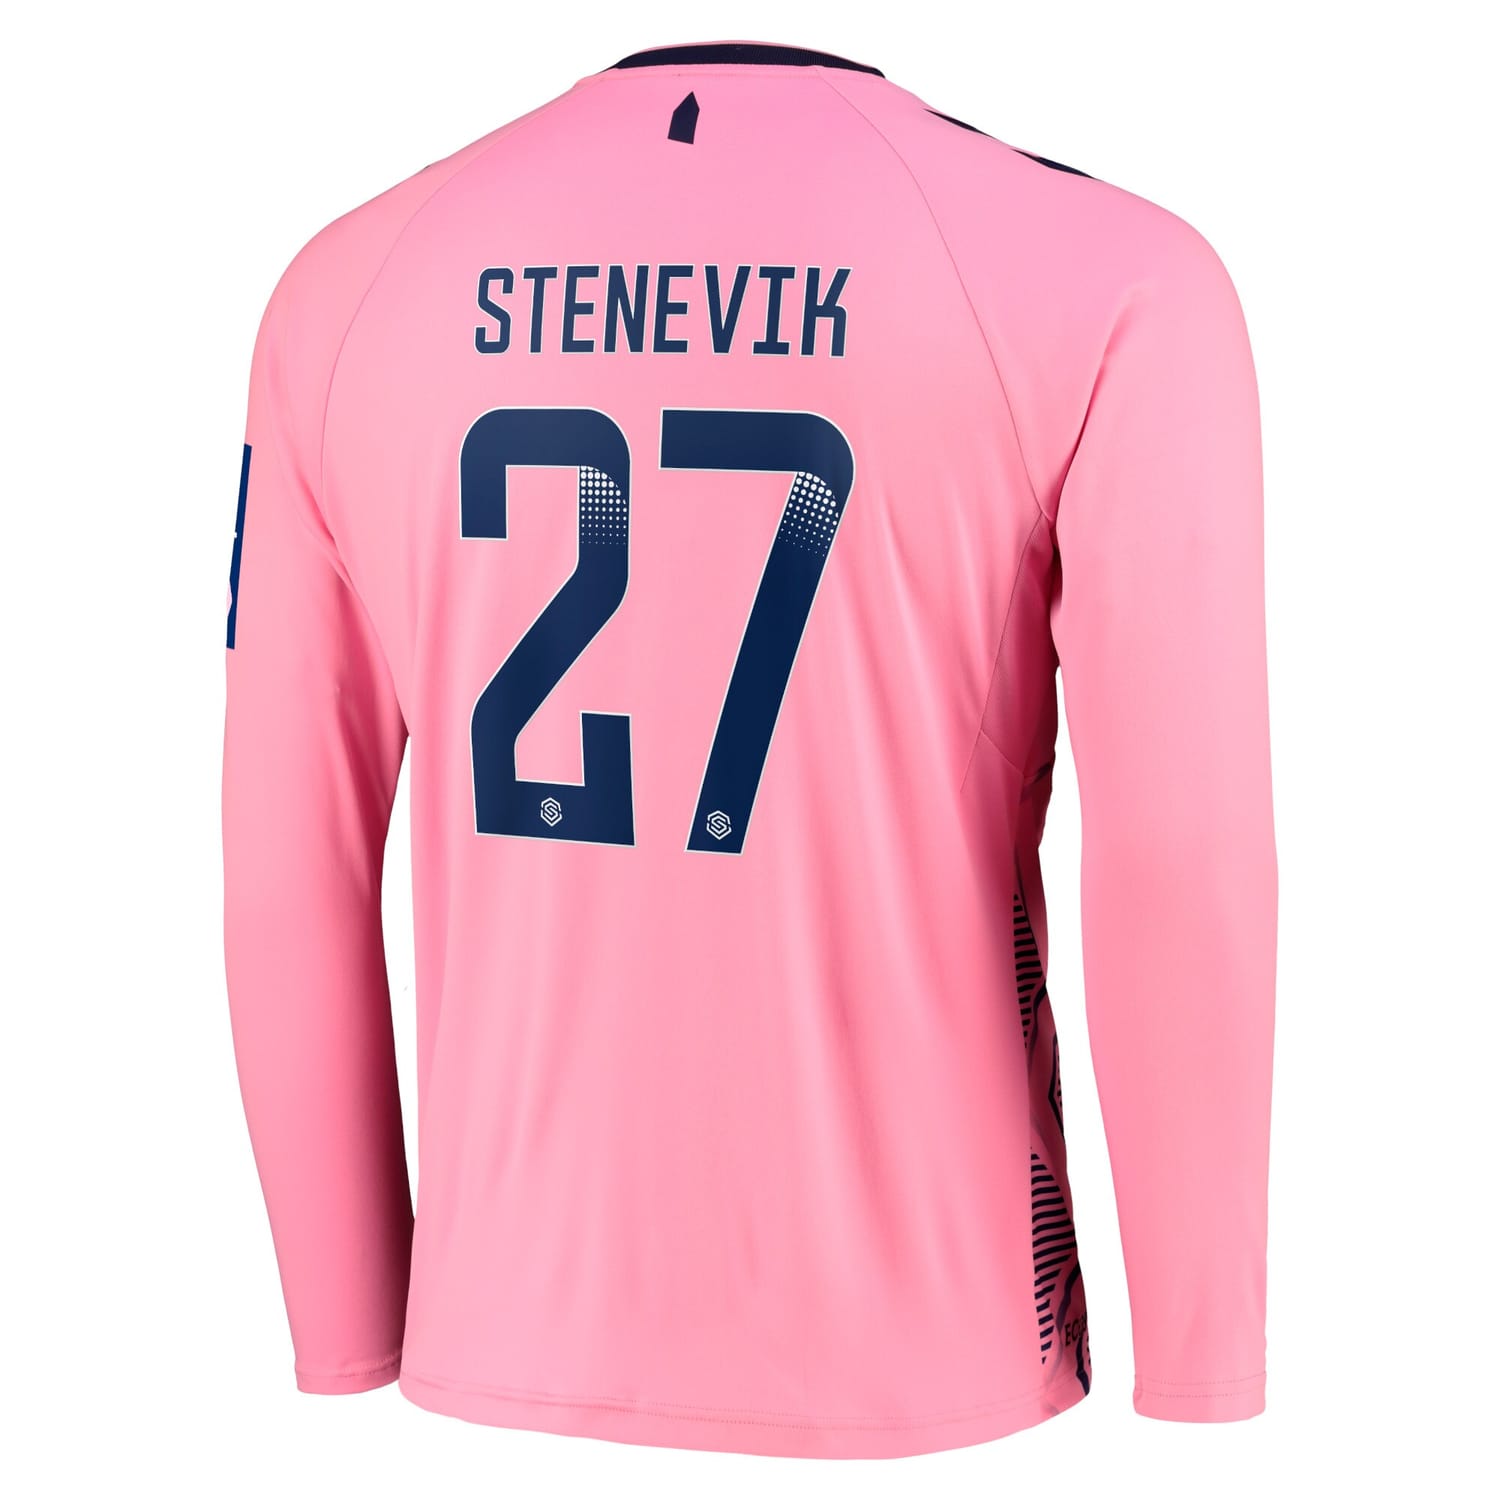 Premier League Everton Away WSL Jersey Shirt Long Sleeve 2022-23 player Elise Stenevik 27 printing for Men